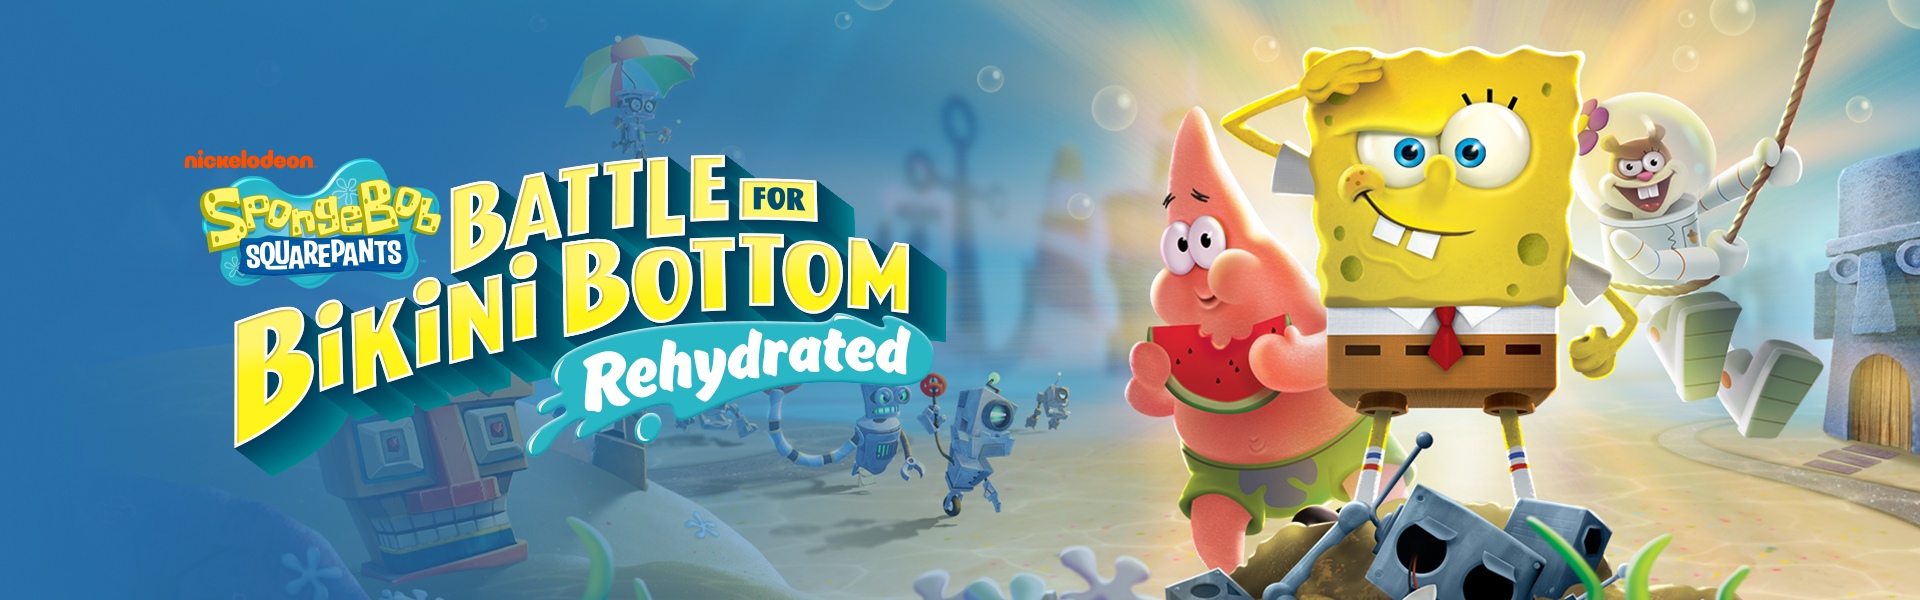 SpongeBob SquarePants: Battle for Bikini Bottom - Rehydrated | THQ Nordic  GmbH